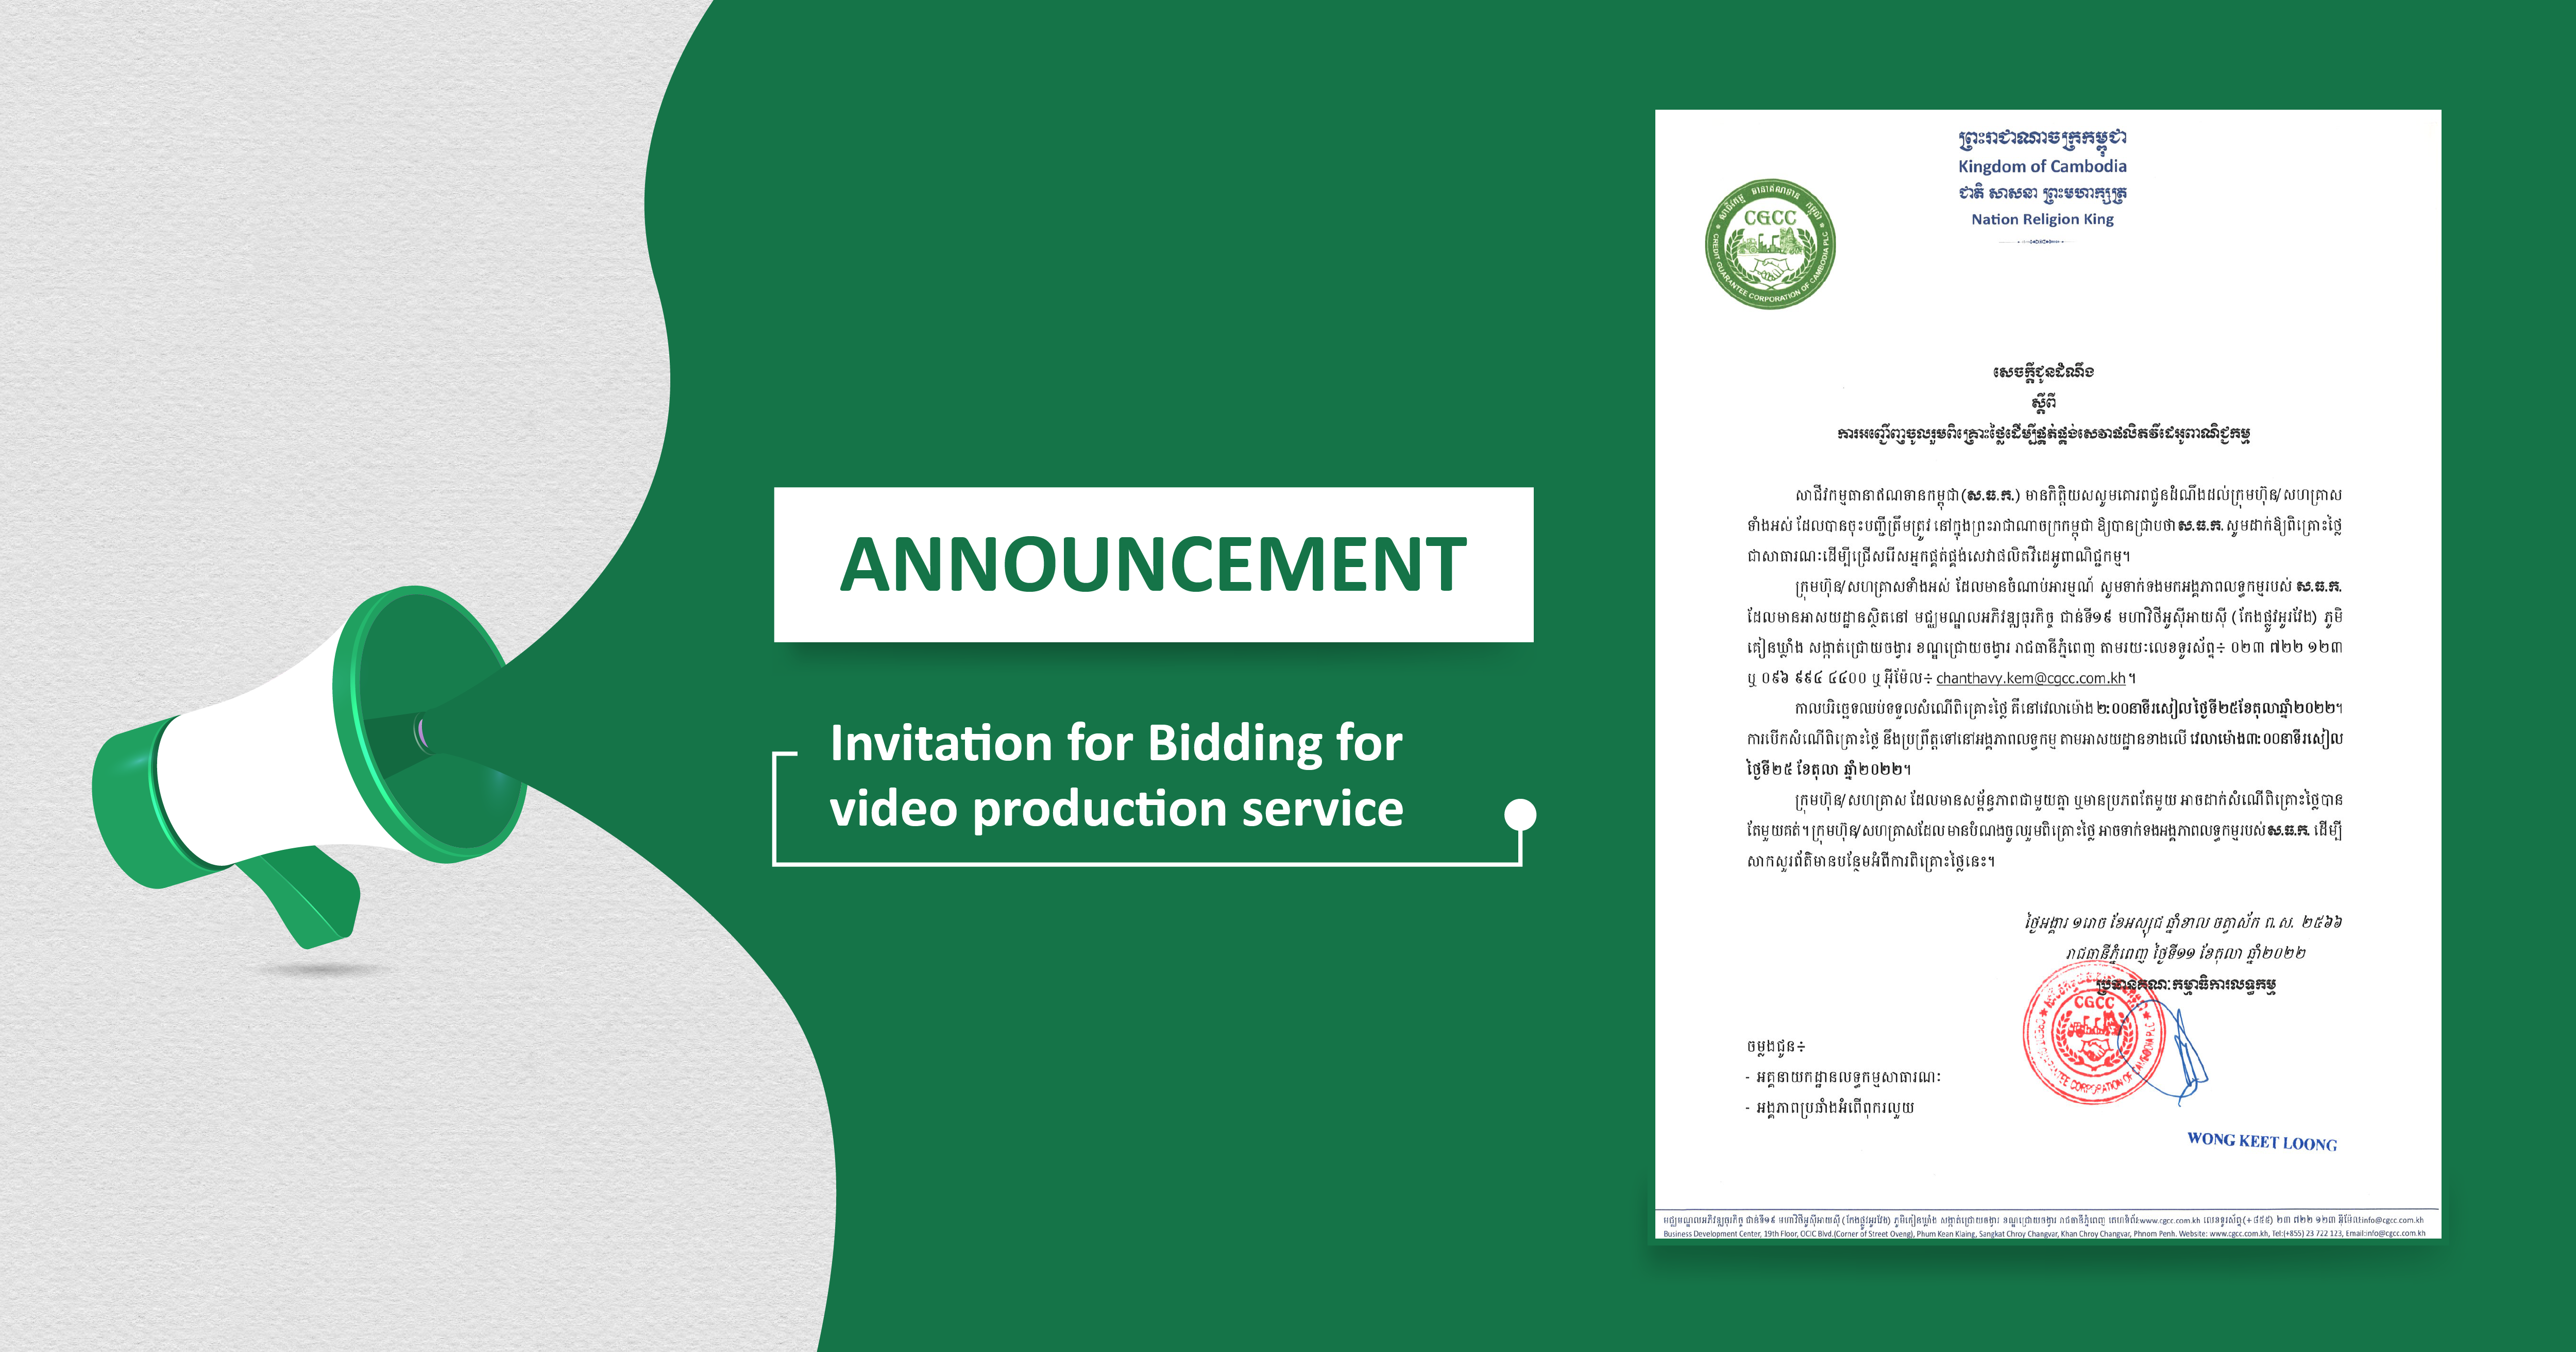 Invitation for Bidding for Video Production Service